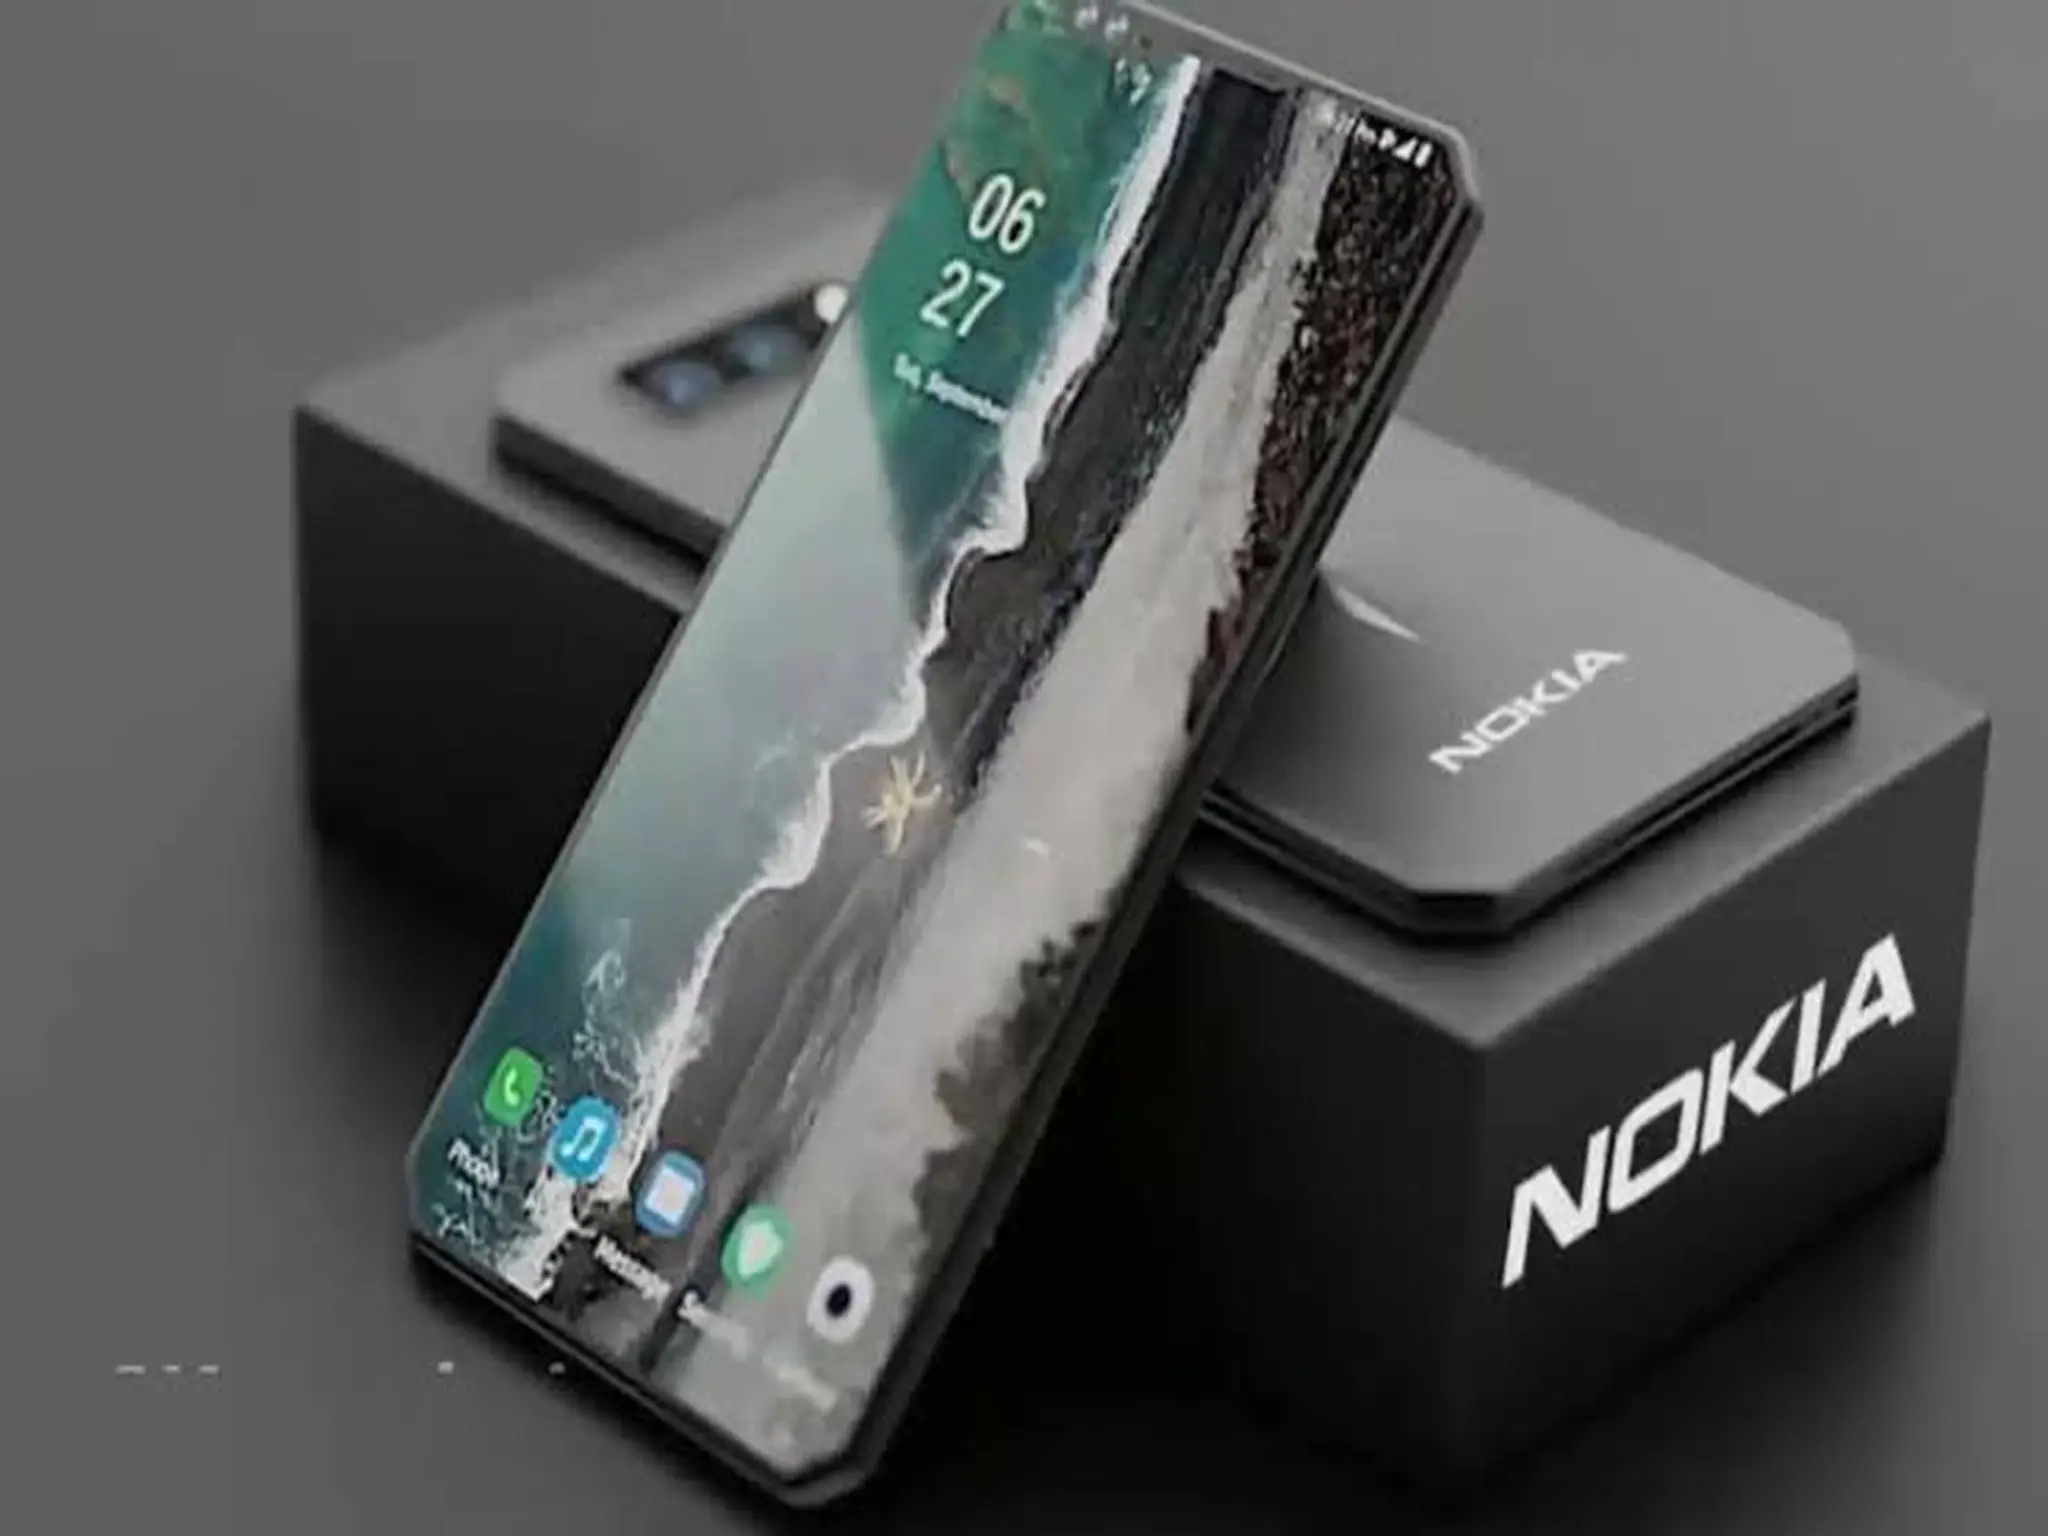 سعر ومواصفات هاتف Nokia Arson Max وحش نوكيا القادم